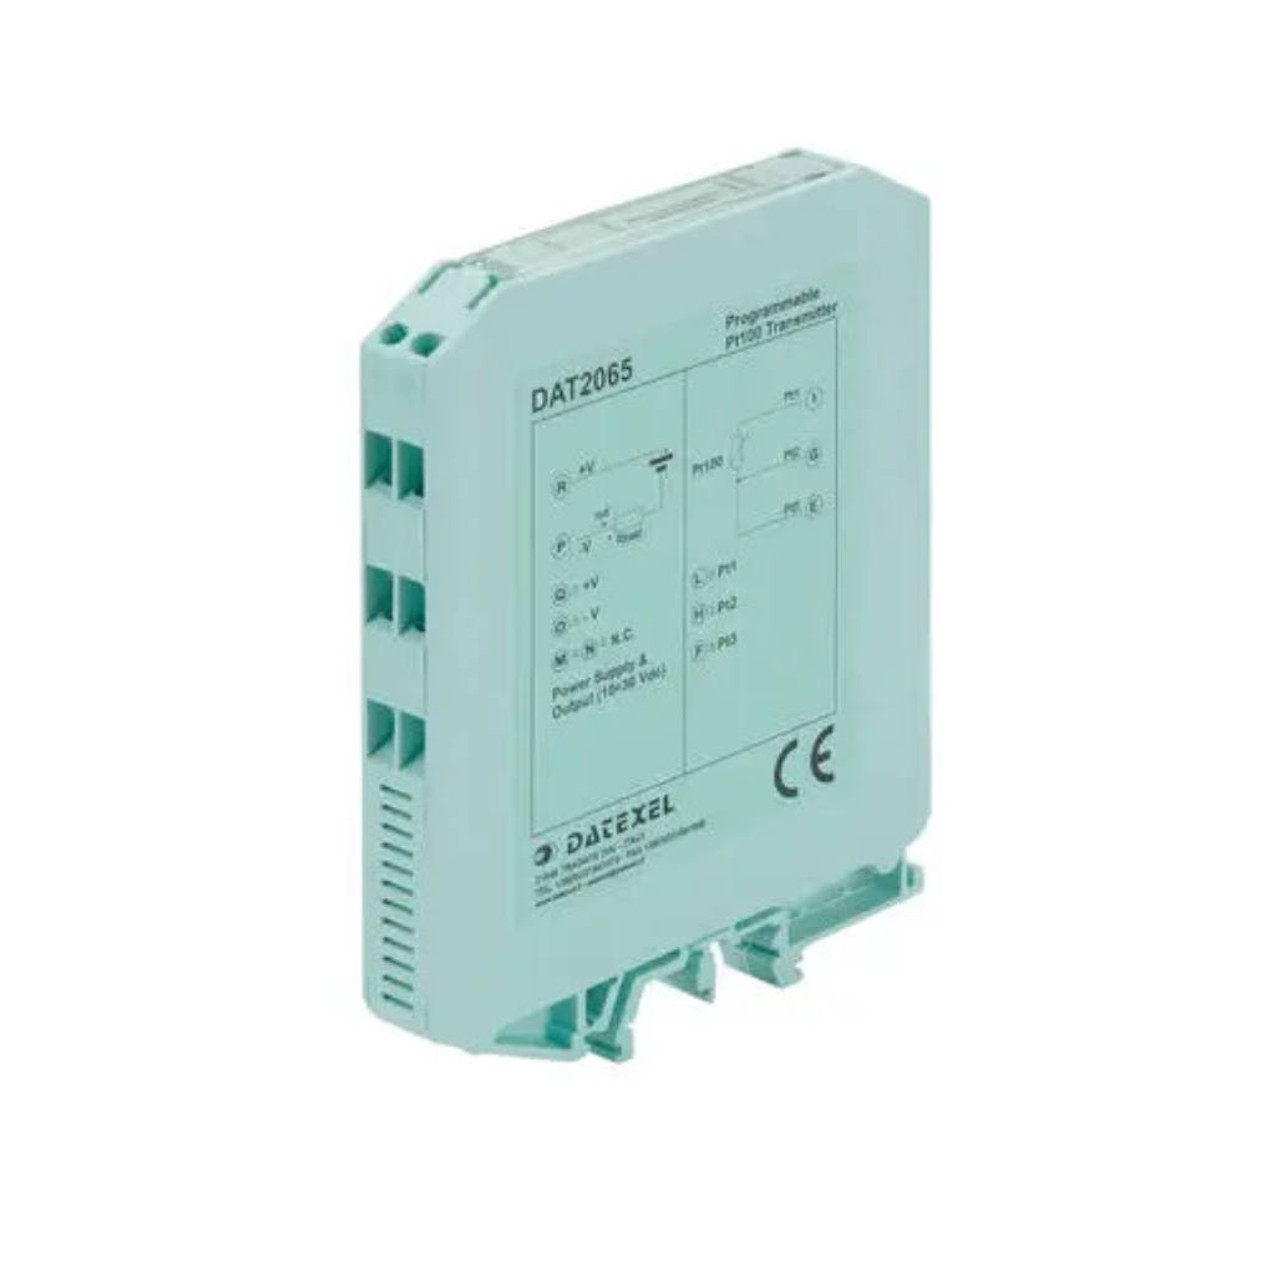 Industrial RDT Temperature Transducer 4-20mA Output Temperature Sensor  PT100 Temperature Transmitter Price